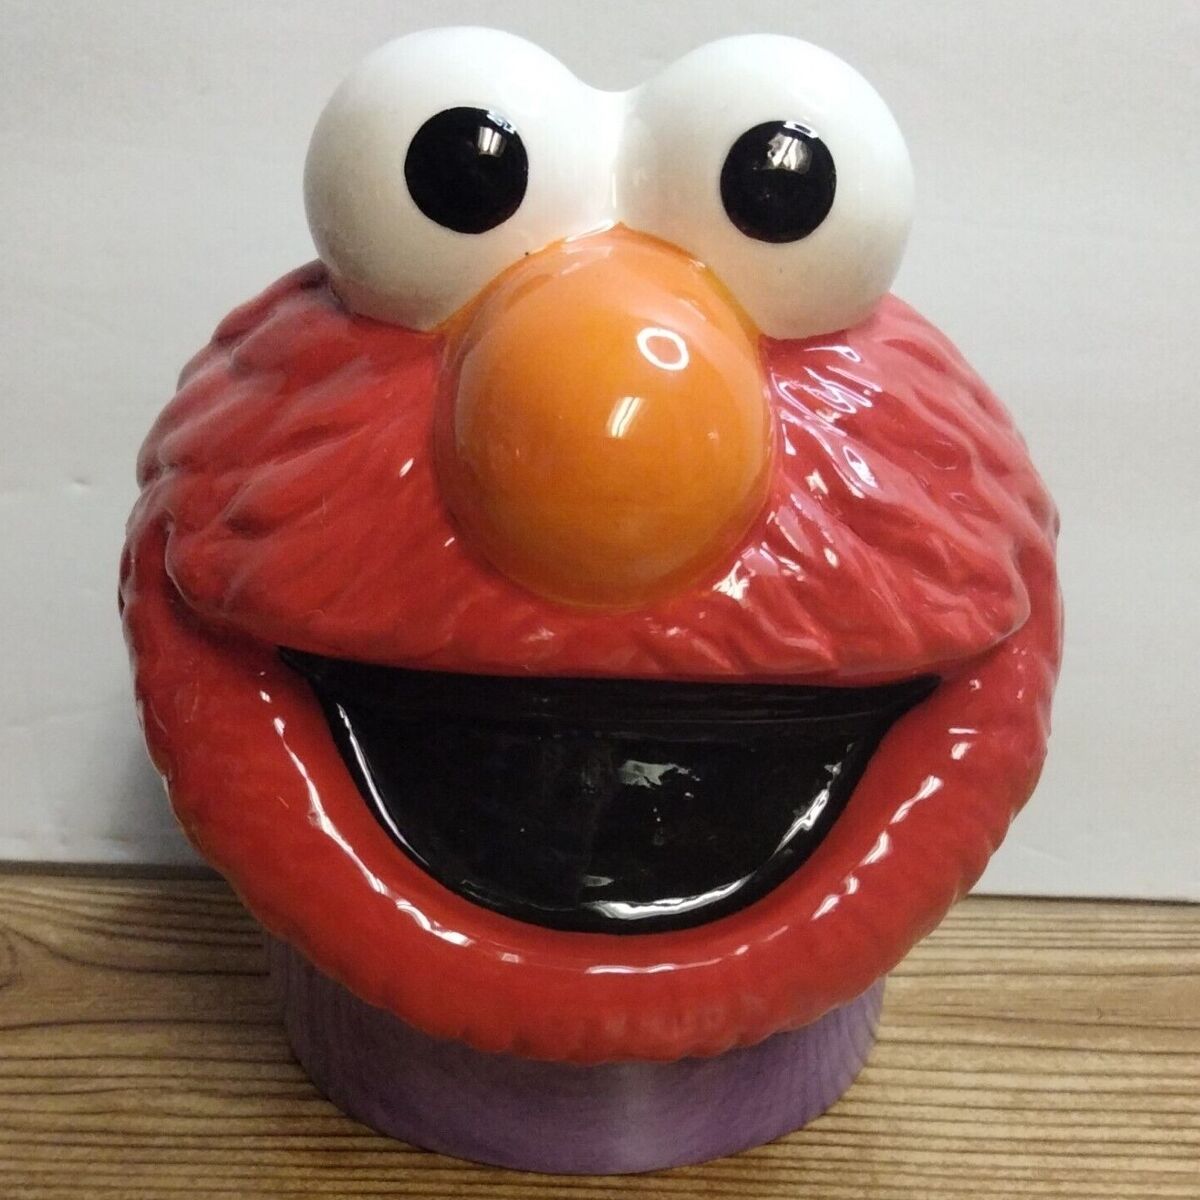 Sesame Street dinnerware (Glad), Muppet Wiki